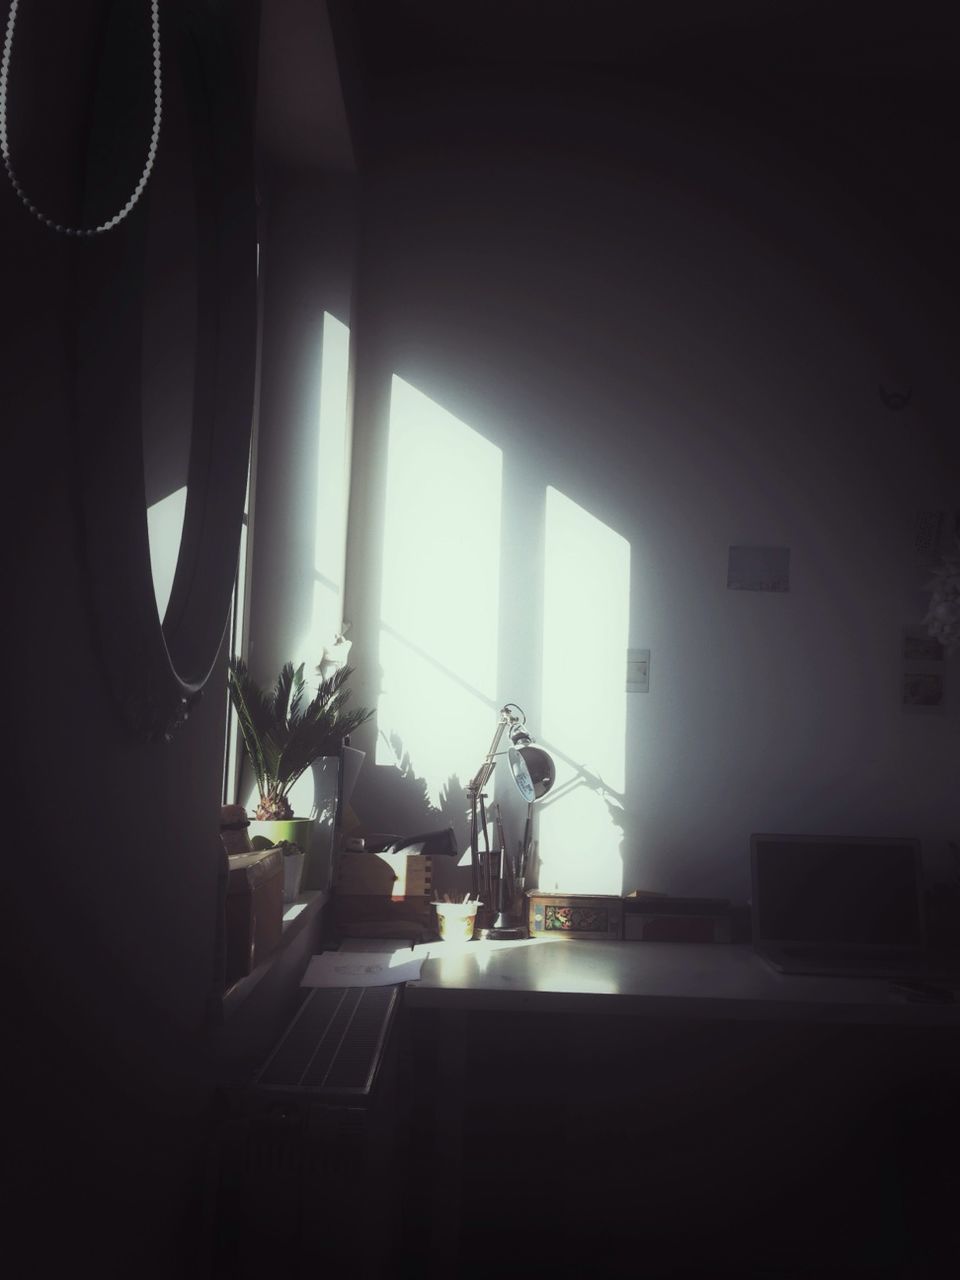 window, indoors, home interior, sunlight, day, no people